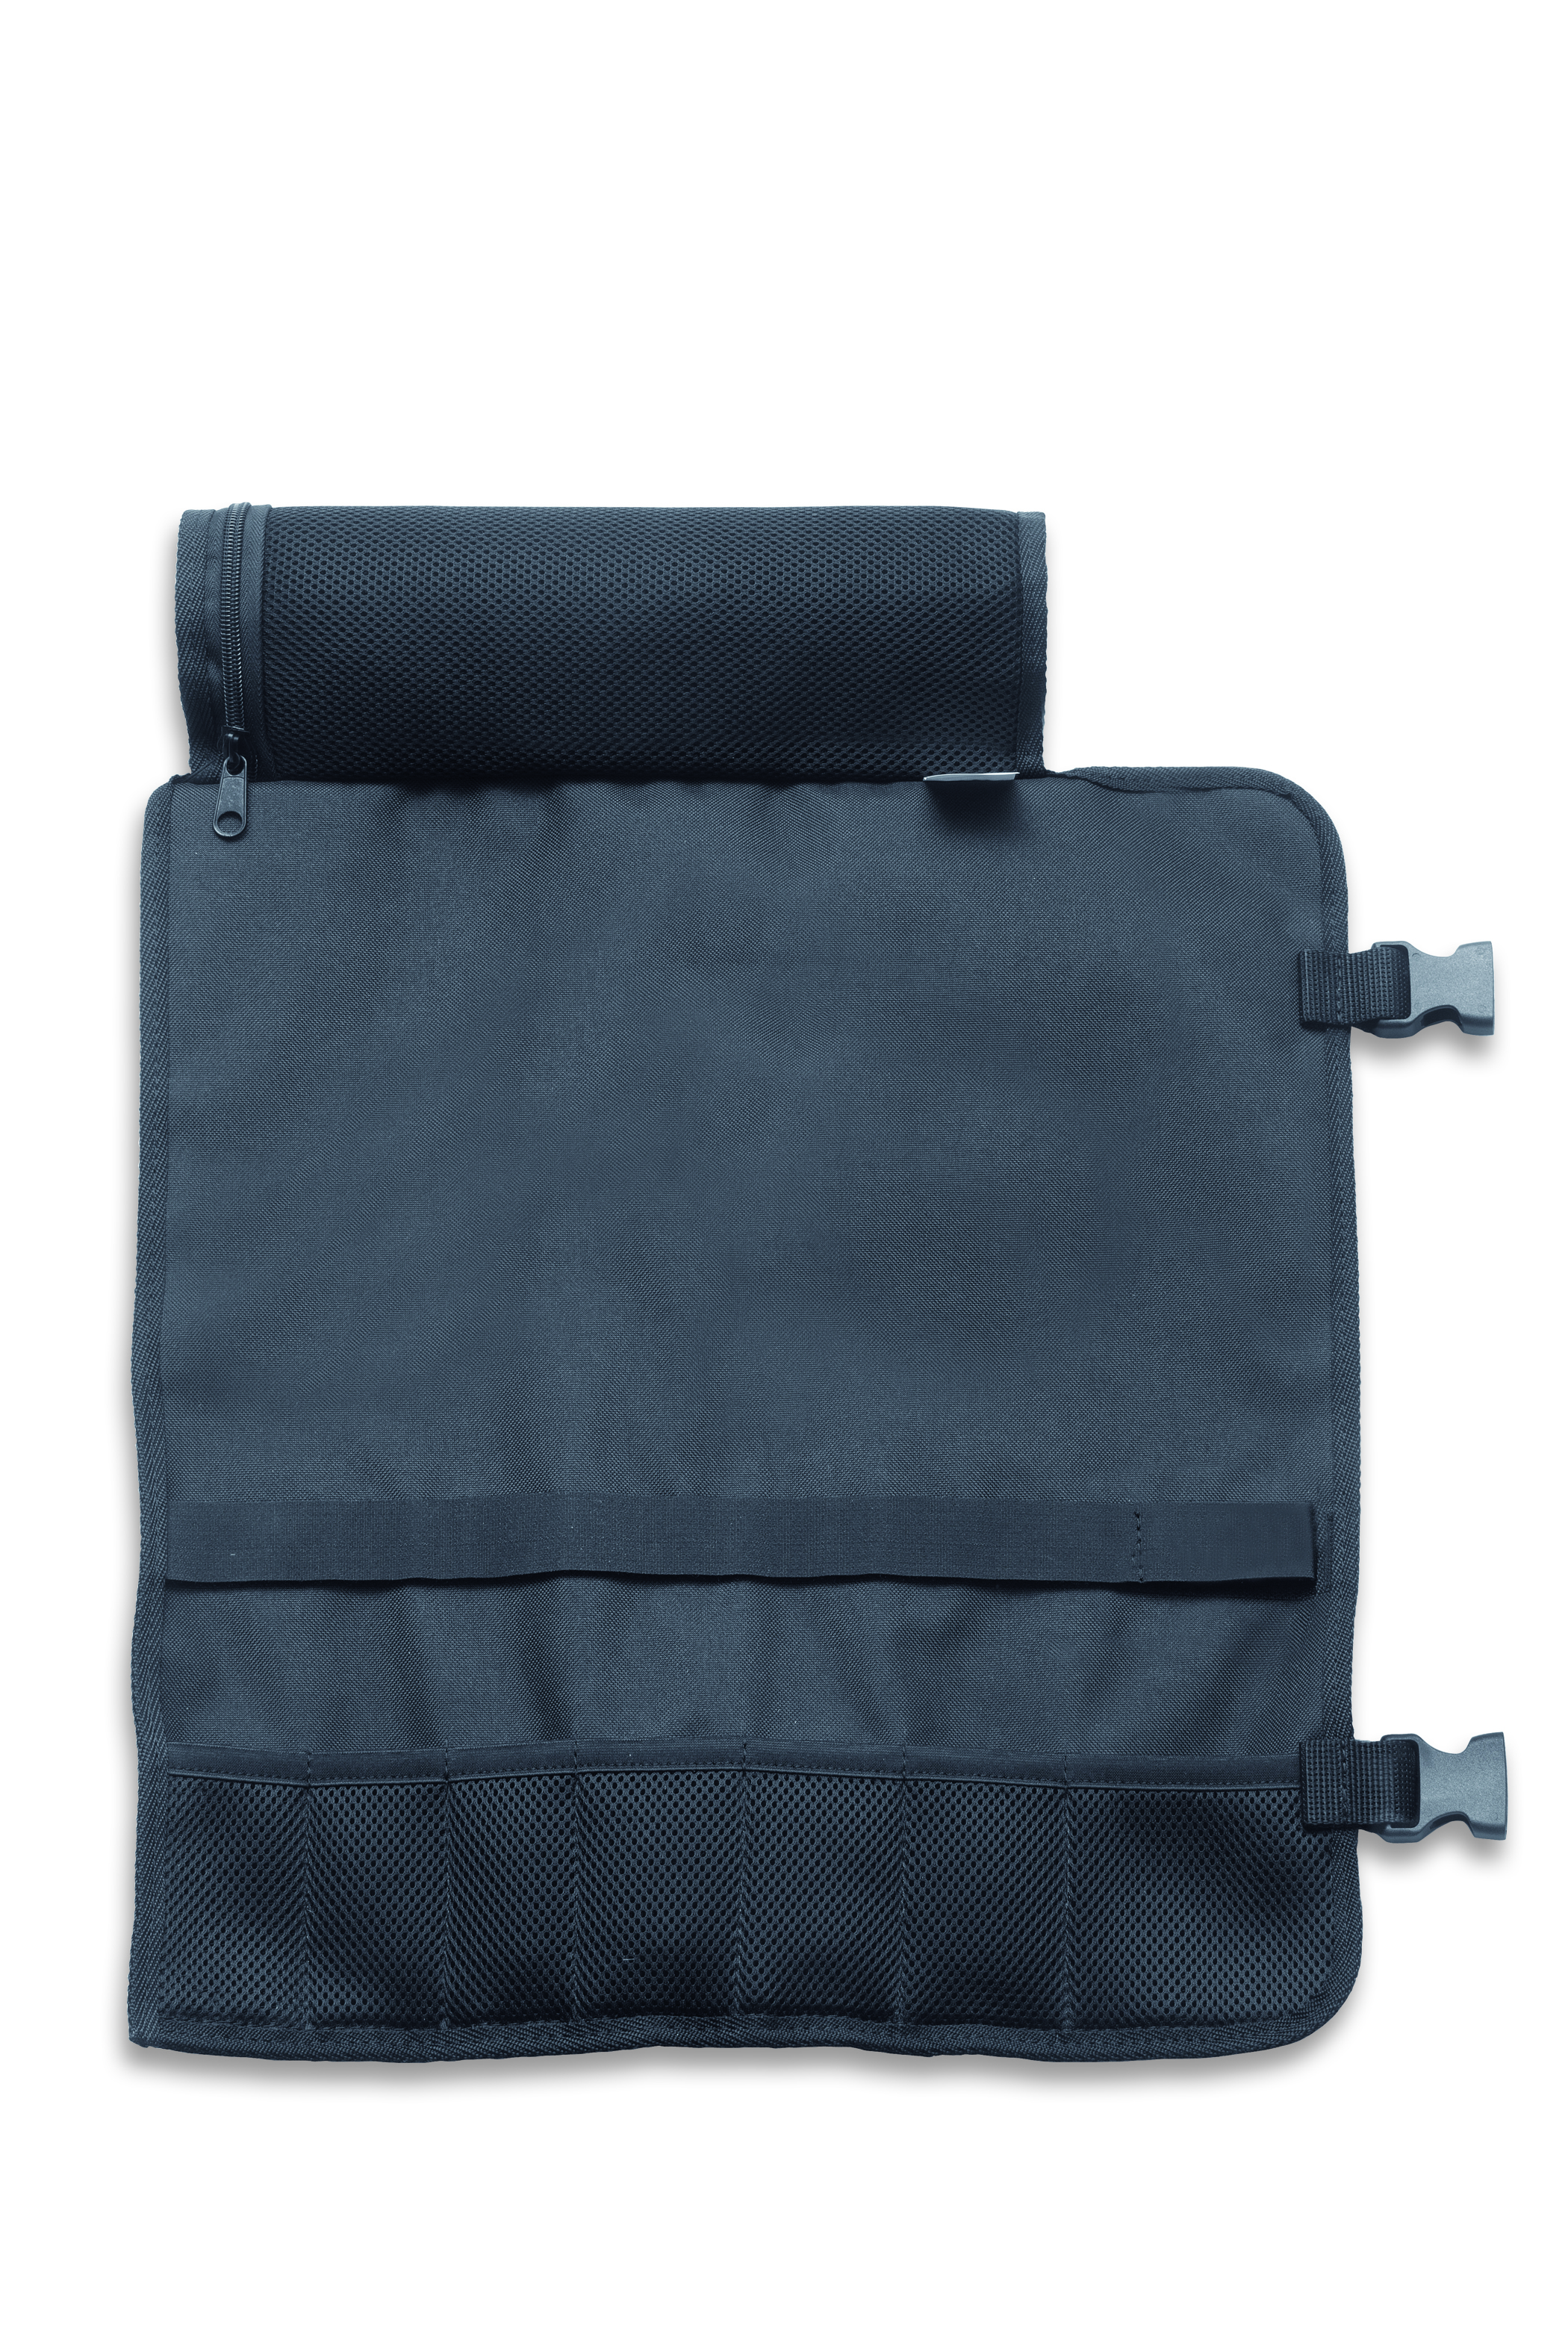 Textil-Rolltasche 7-tlg., waschbar, leer